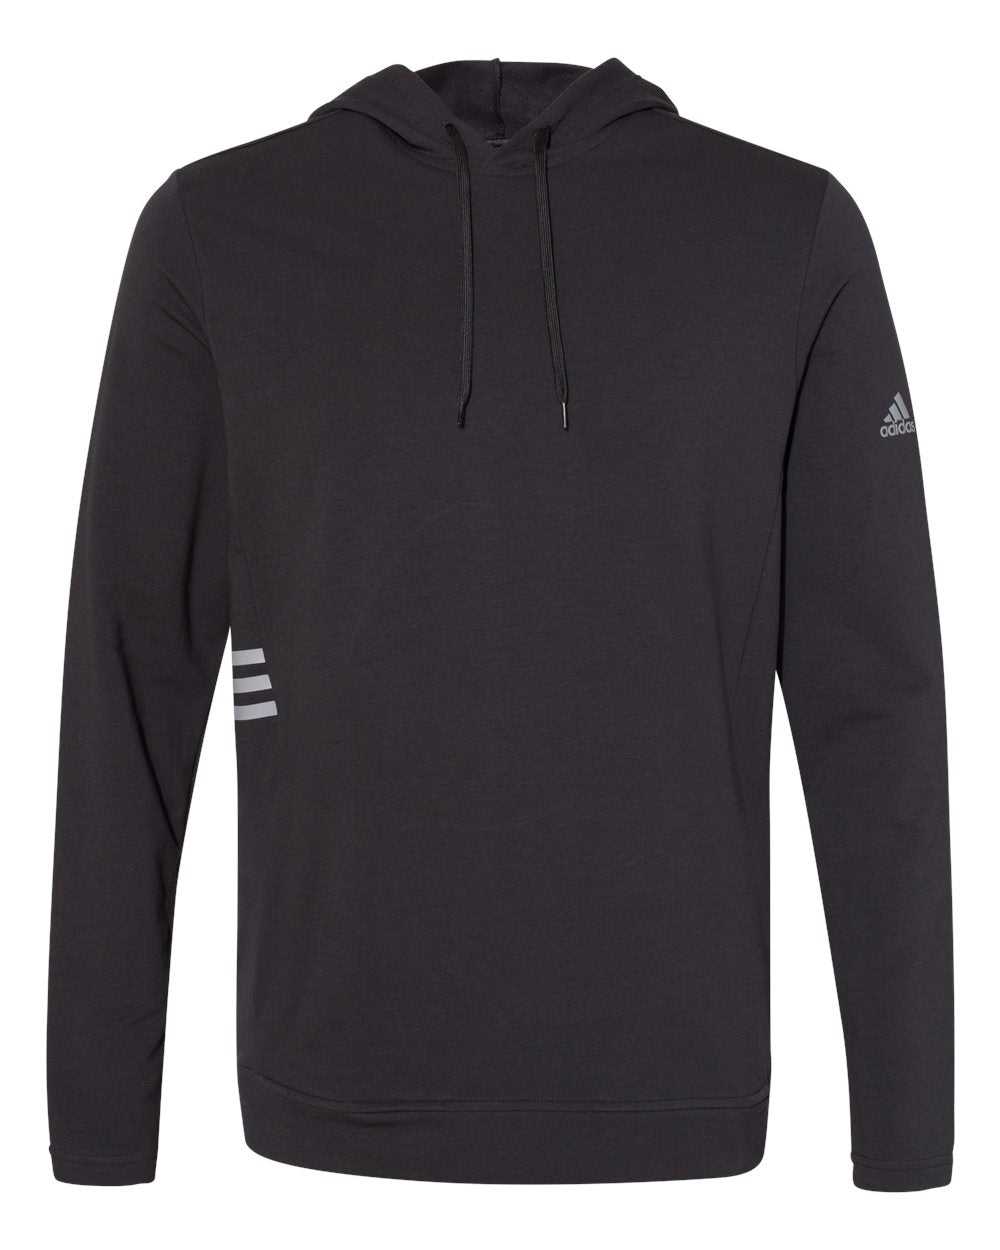 Adidas A450 Lightweight Hooded Sweatshirt - Black - HIT a Double